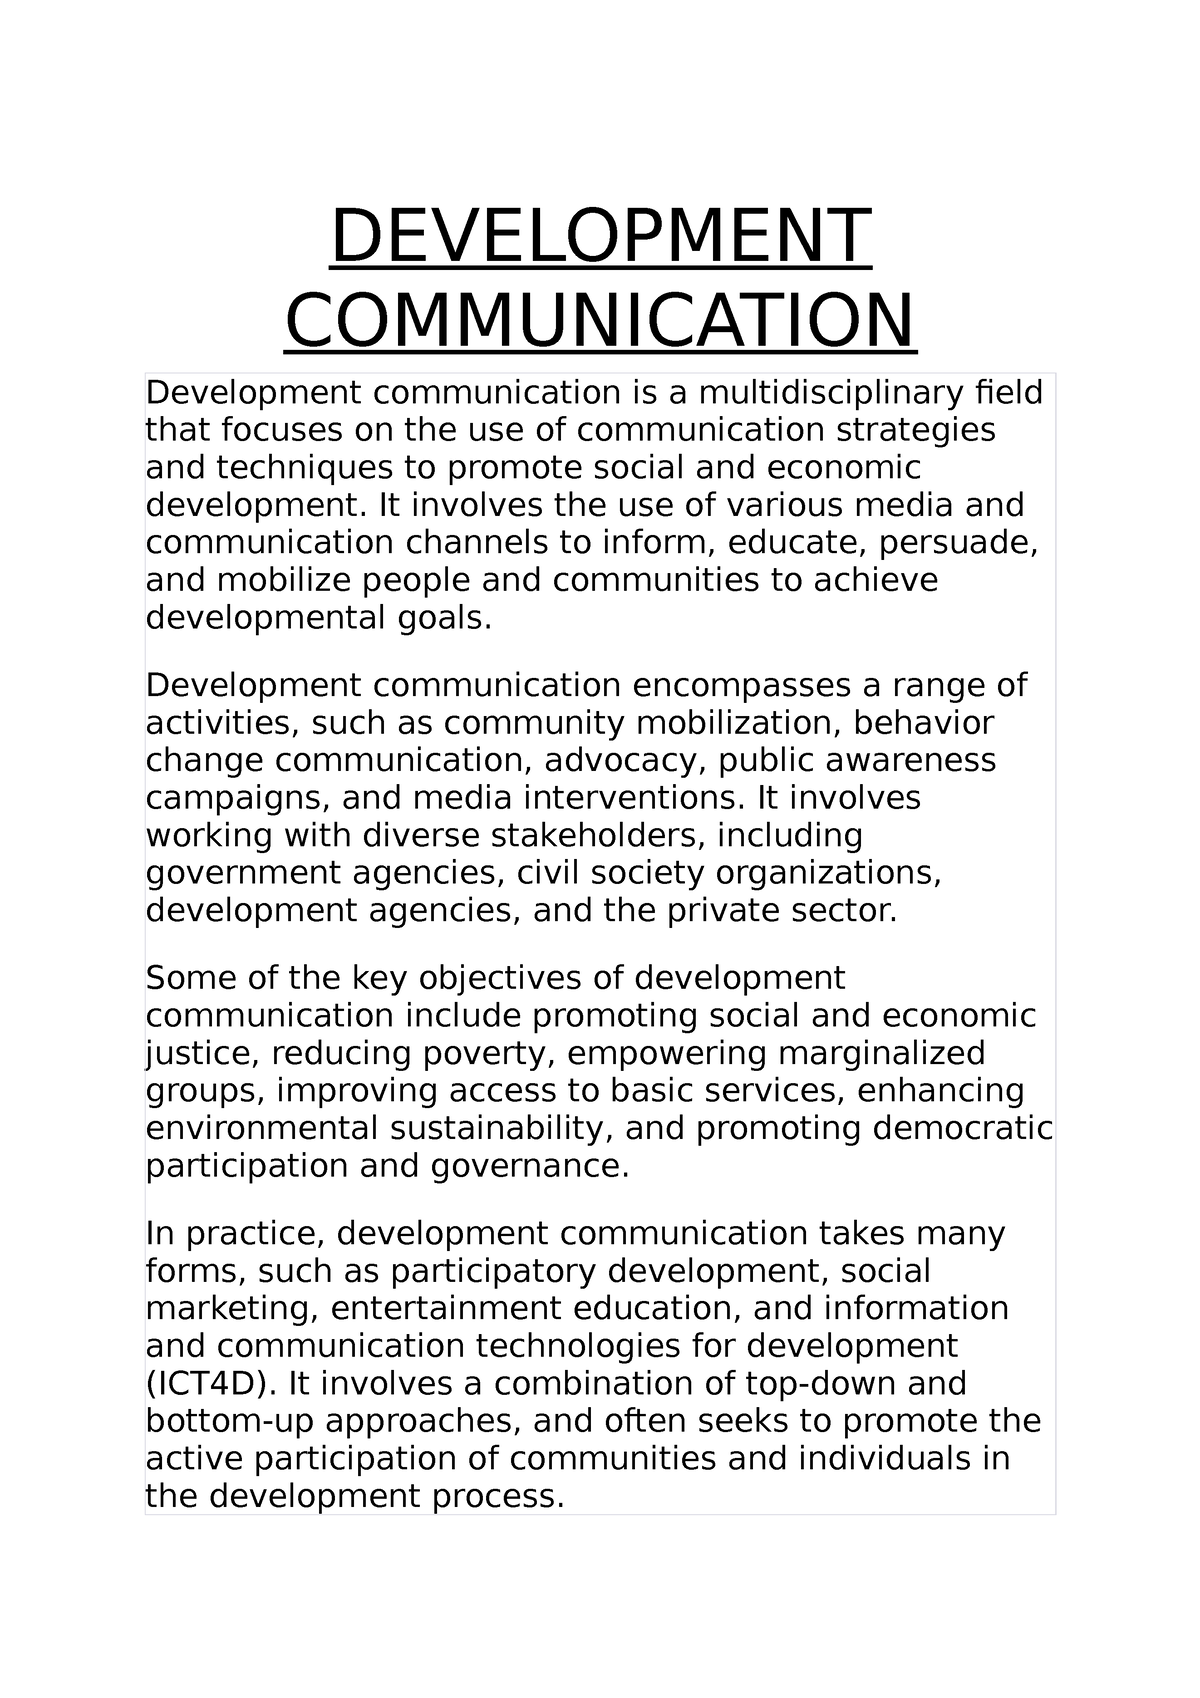 development communication dissertation topics